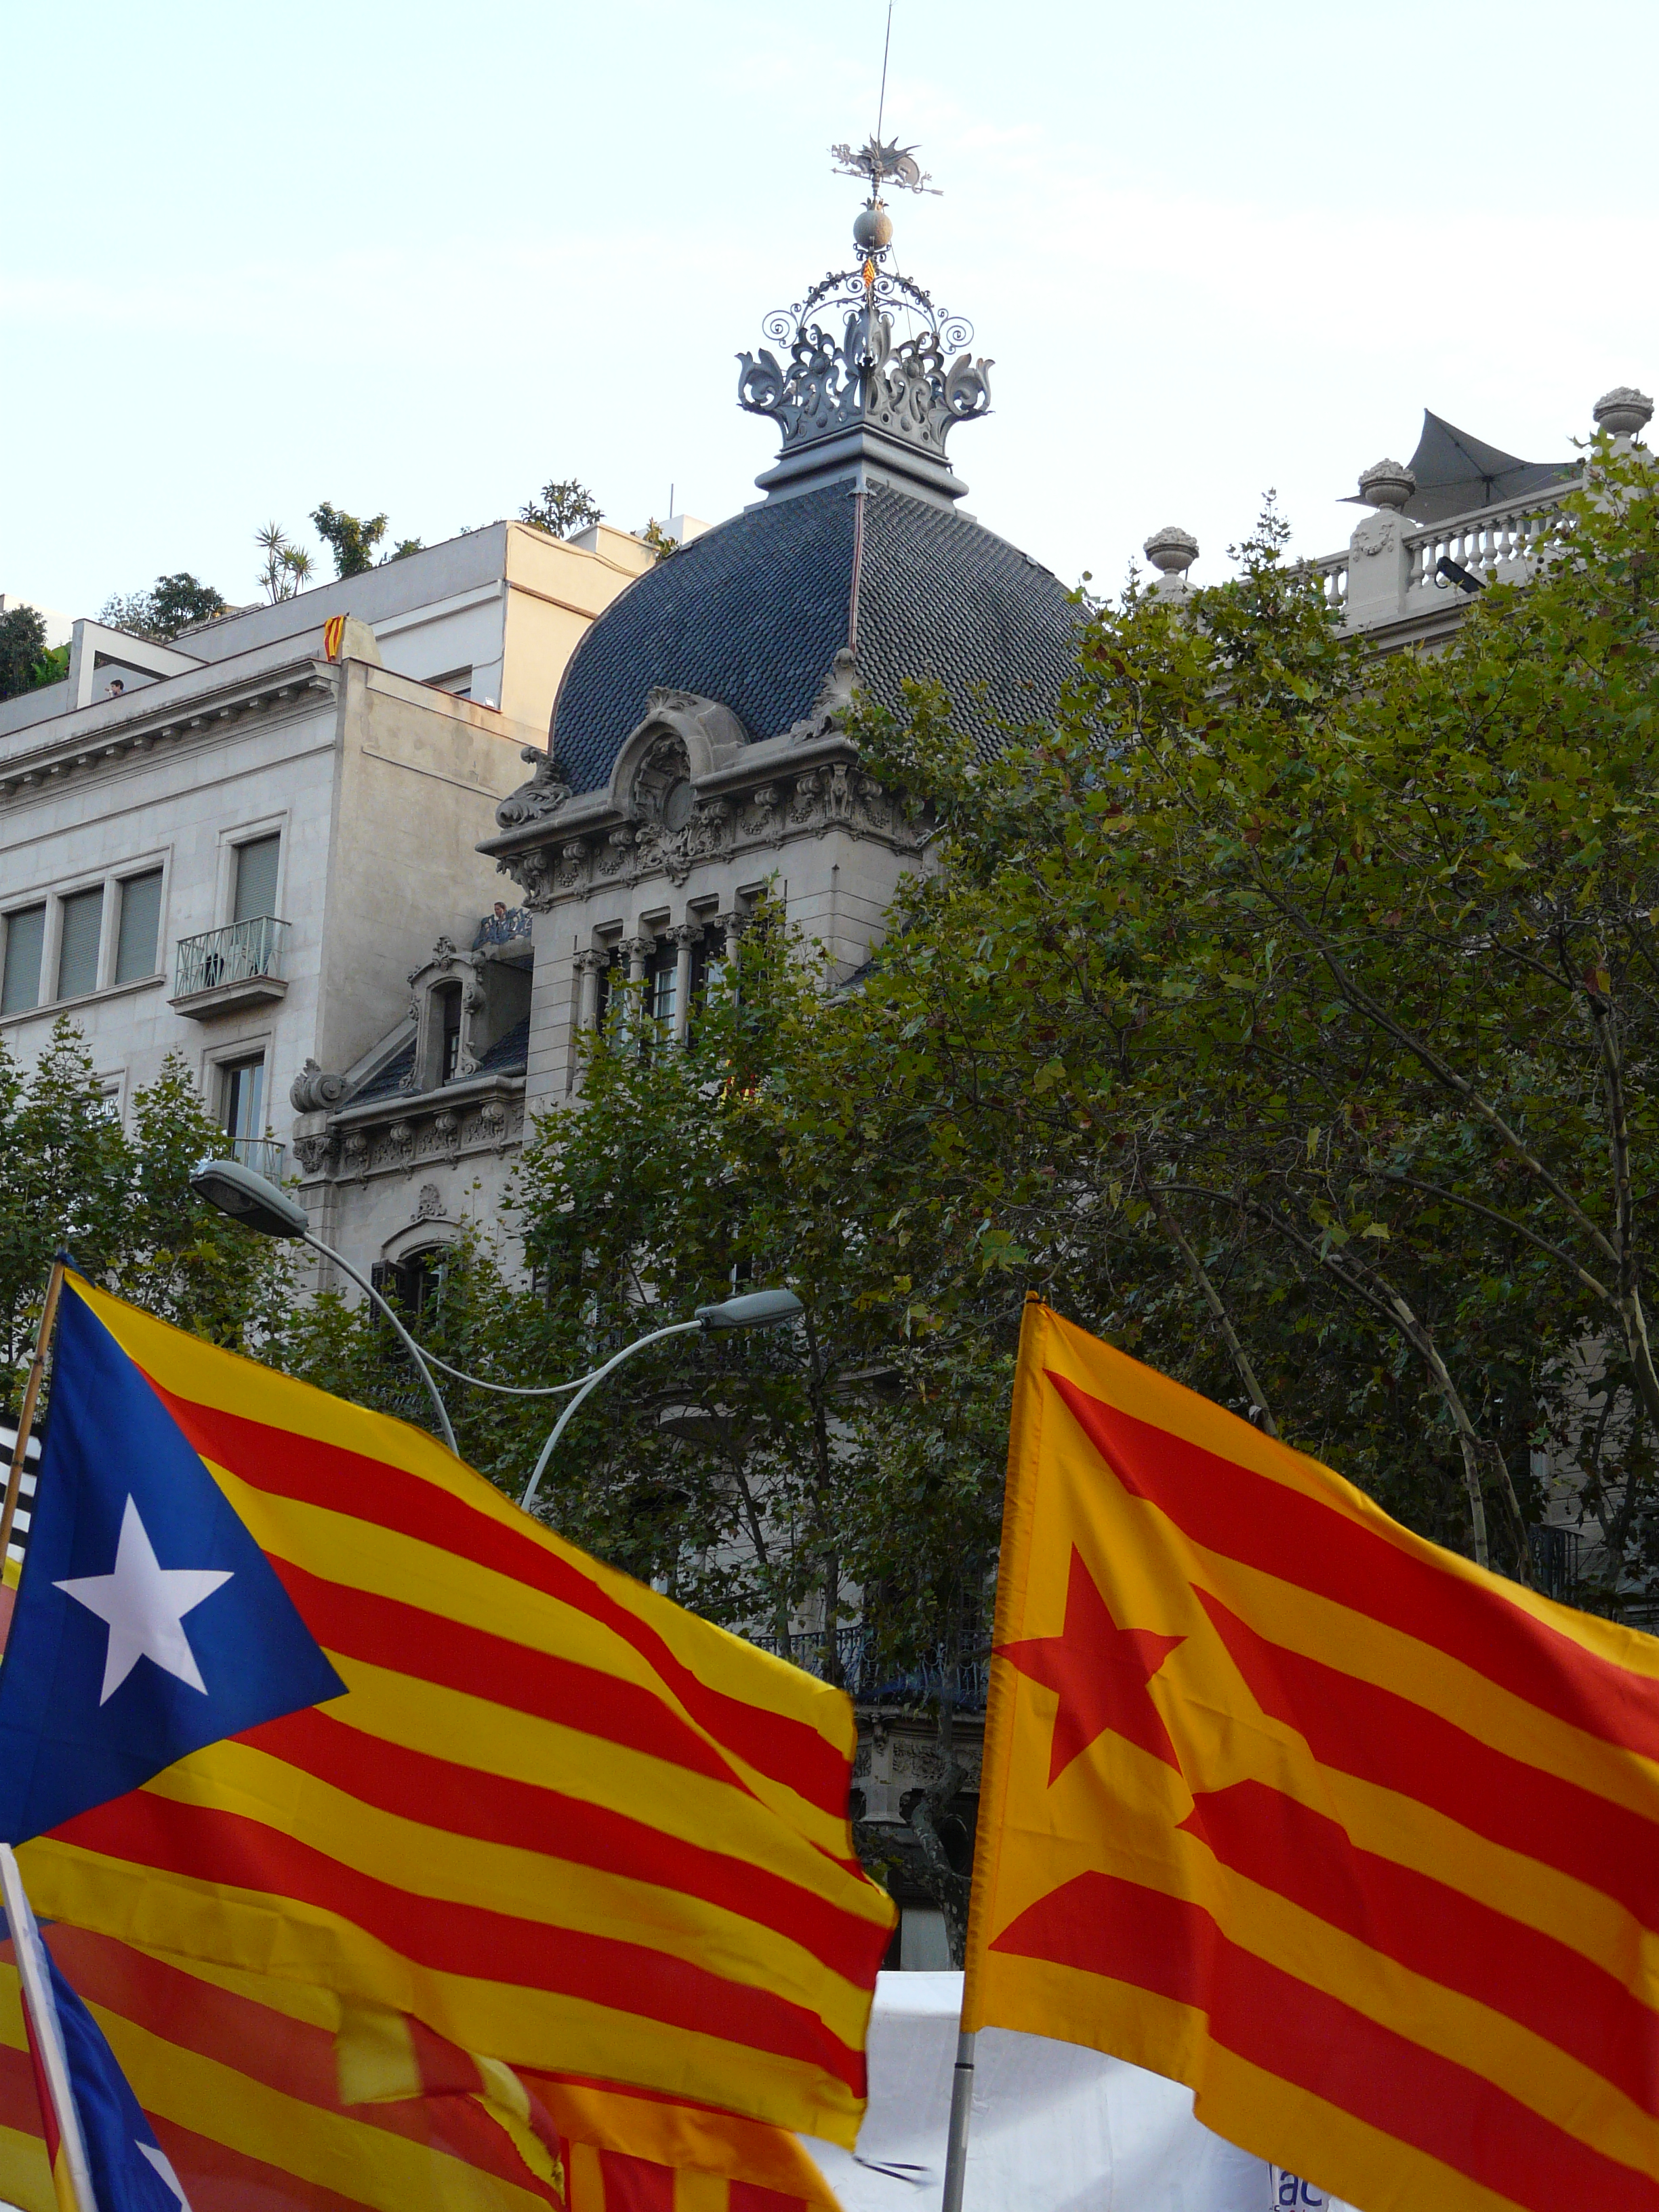 Keith Martin presents Fun with Flags: the evolution of the Catalan Estelada